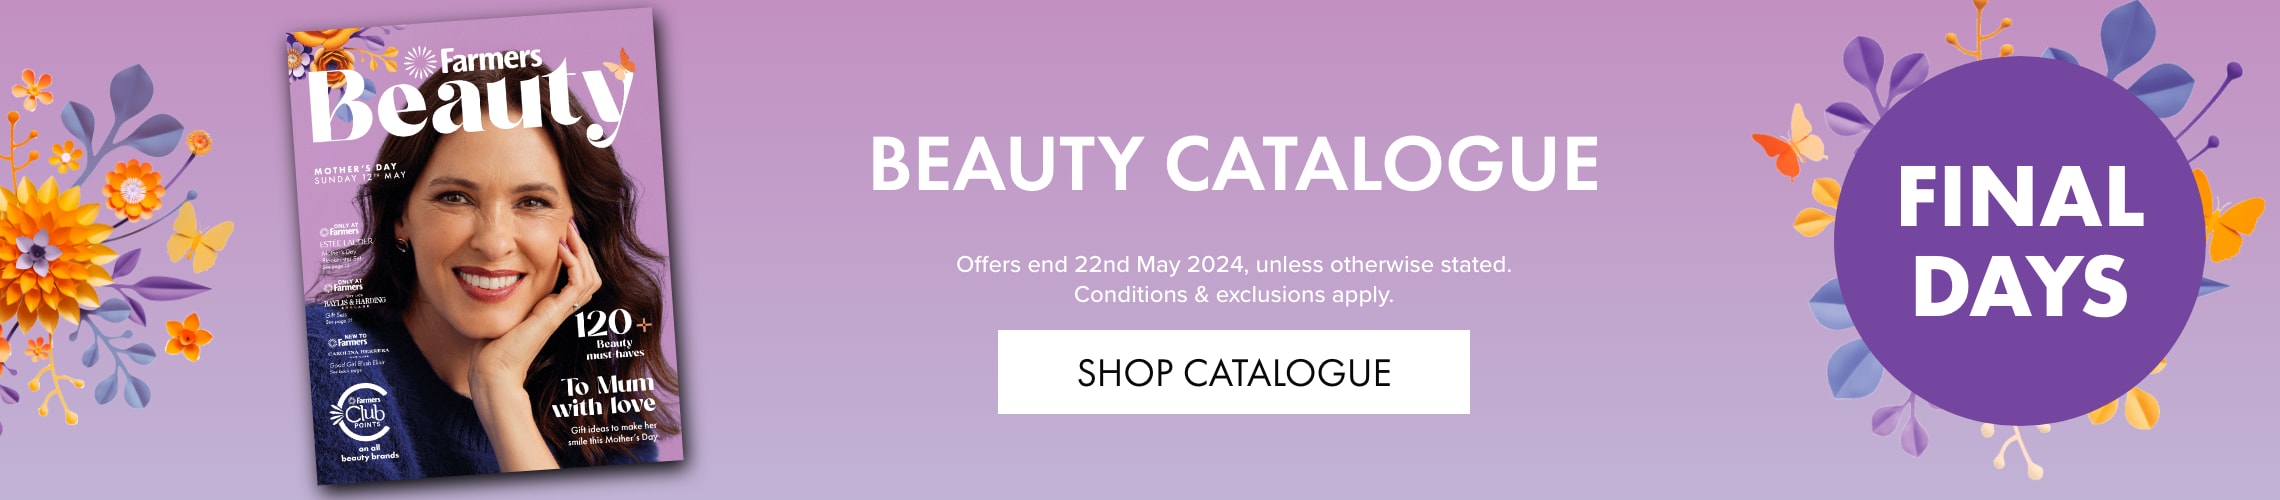 Beauty Catalogue - FINAL DAYS!